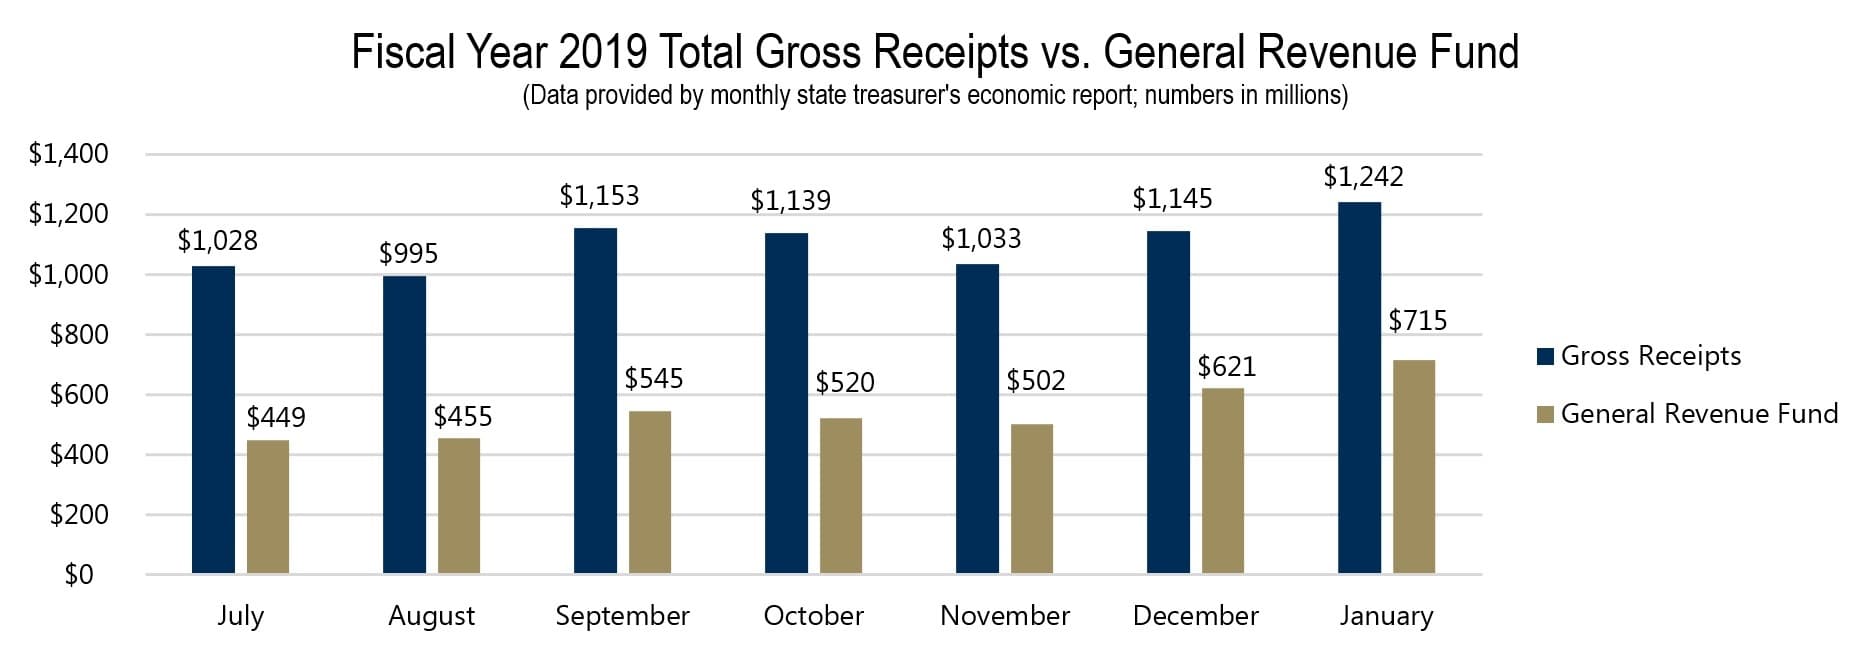 FY 2019 Total Gross Receipts vs. General Revenue Fund